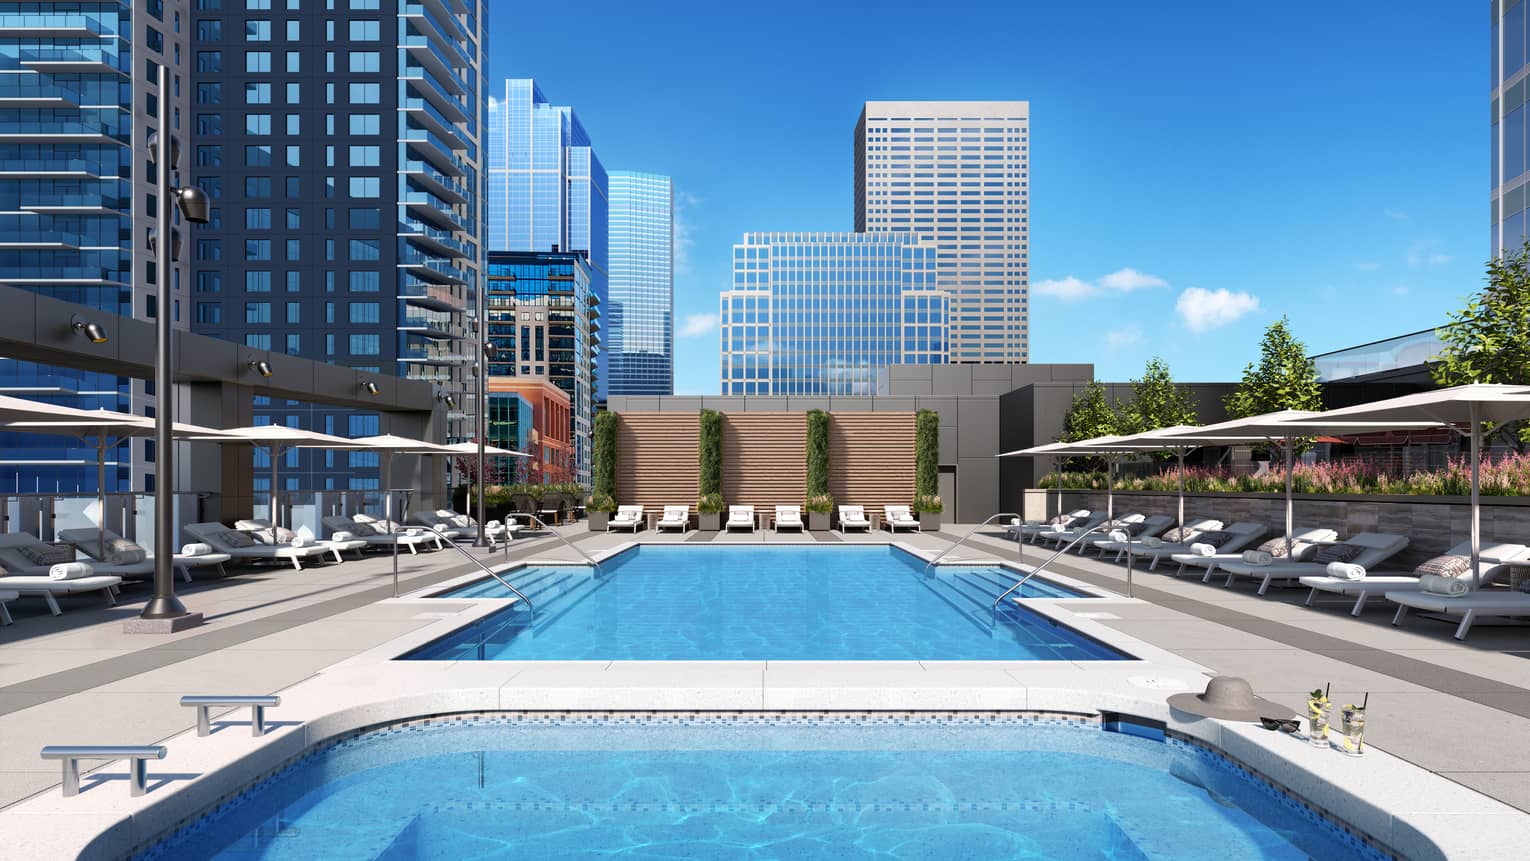 Rendering of outdoor hotel pool with Minneapolis skyline